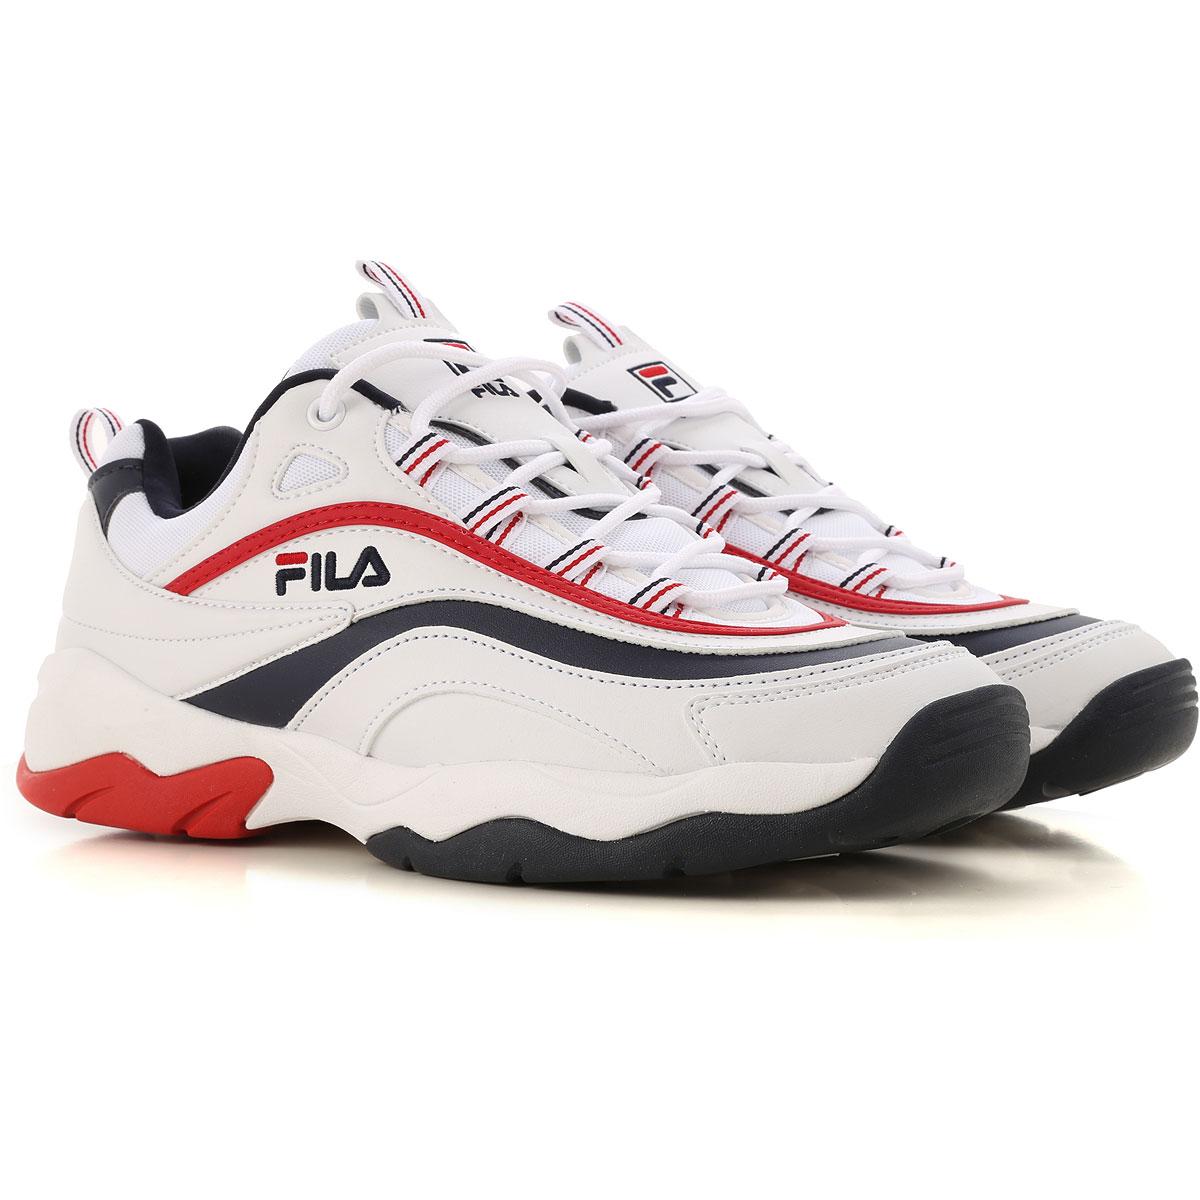 Fila Sneakers For Men On Sale in White for Men - Lyst